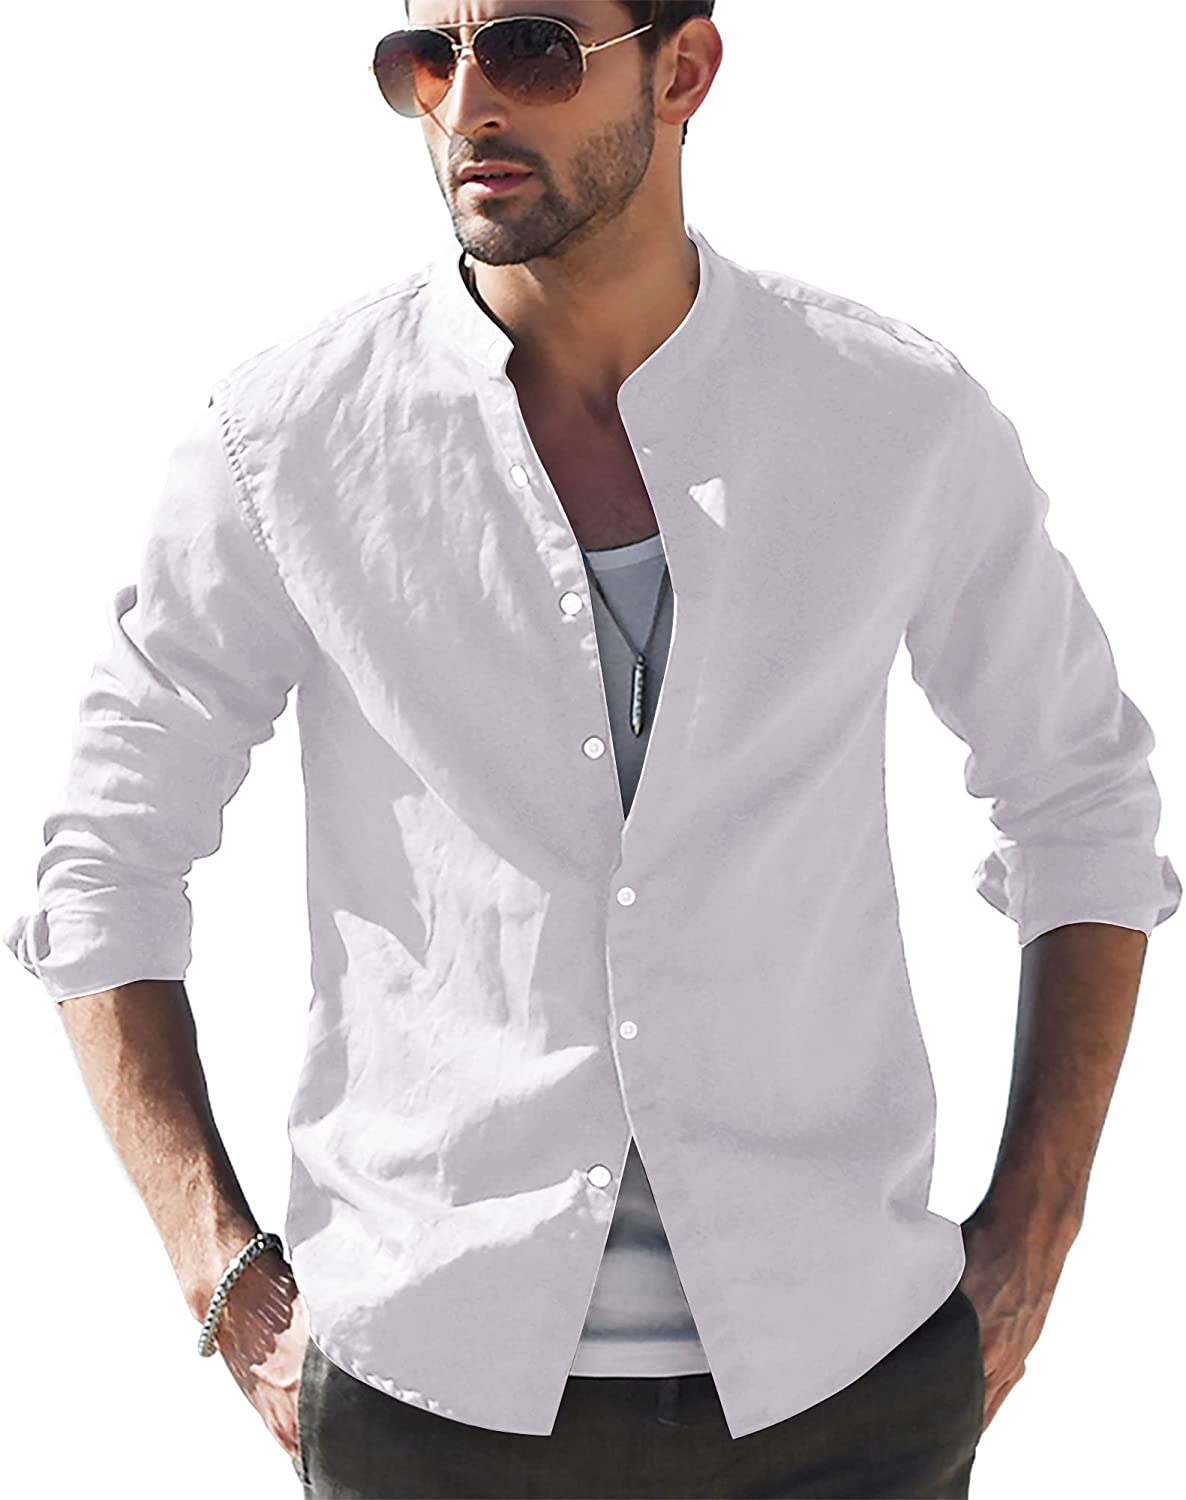 LVCBL Mens Casual Cotton Shirt Long Sleeve Band Collar Henley Shirt Tops 